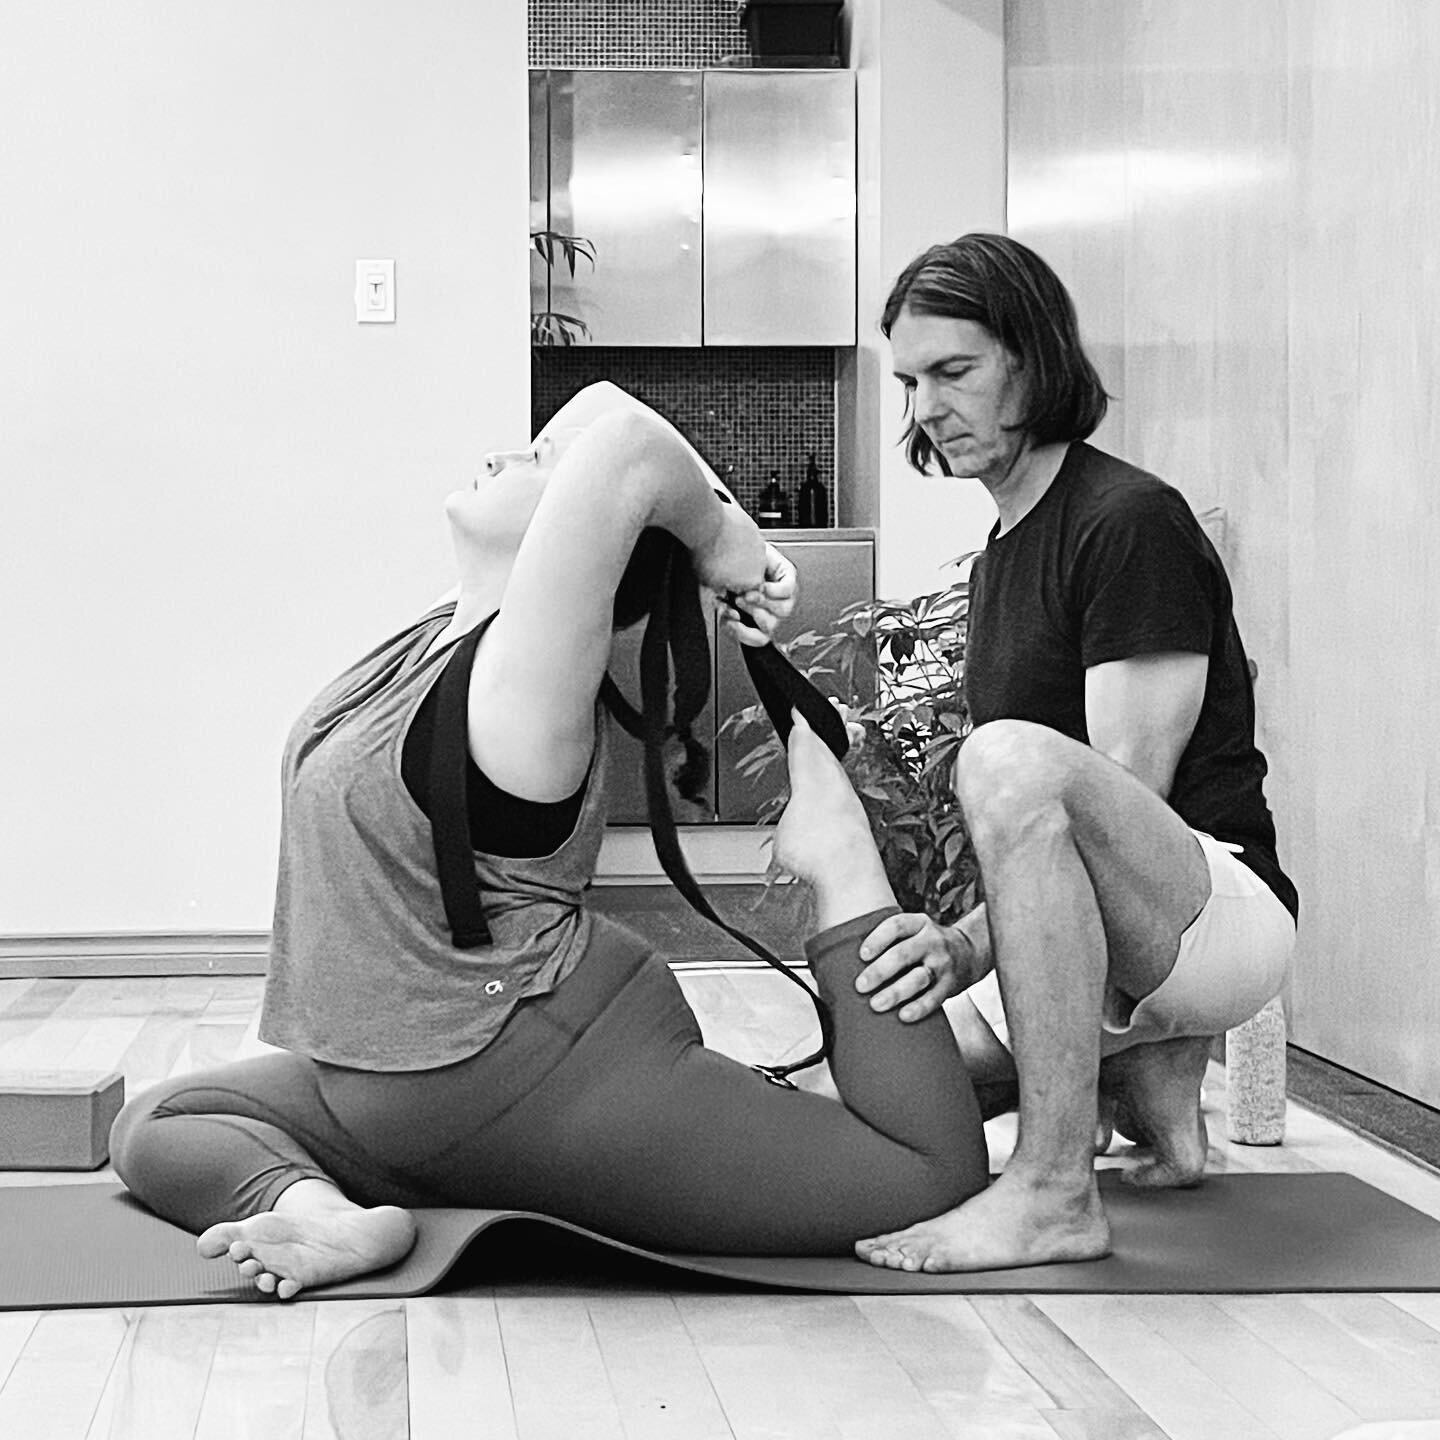 PRECISION + PROGRESS Toronto workshop. This one takes work to get into. She&rsquo;s making it look easy! Photo @alannahrad @clarabell.a 
#ekapadarajakapotasana #kingpigeon #hathayoga #yogaworkshop